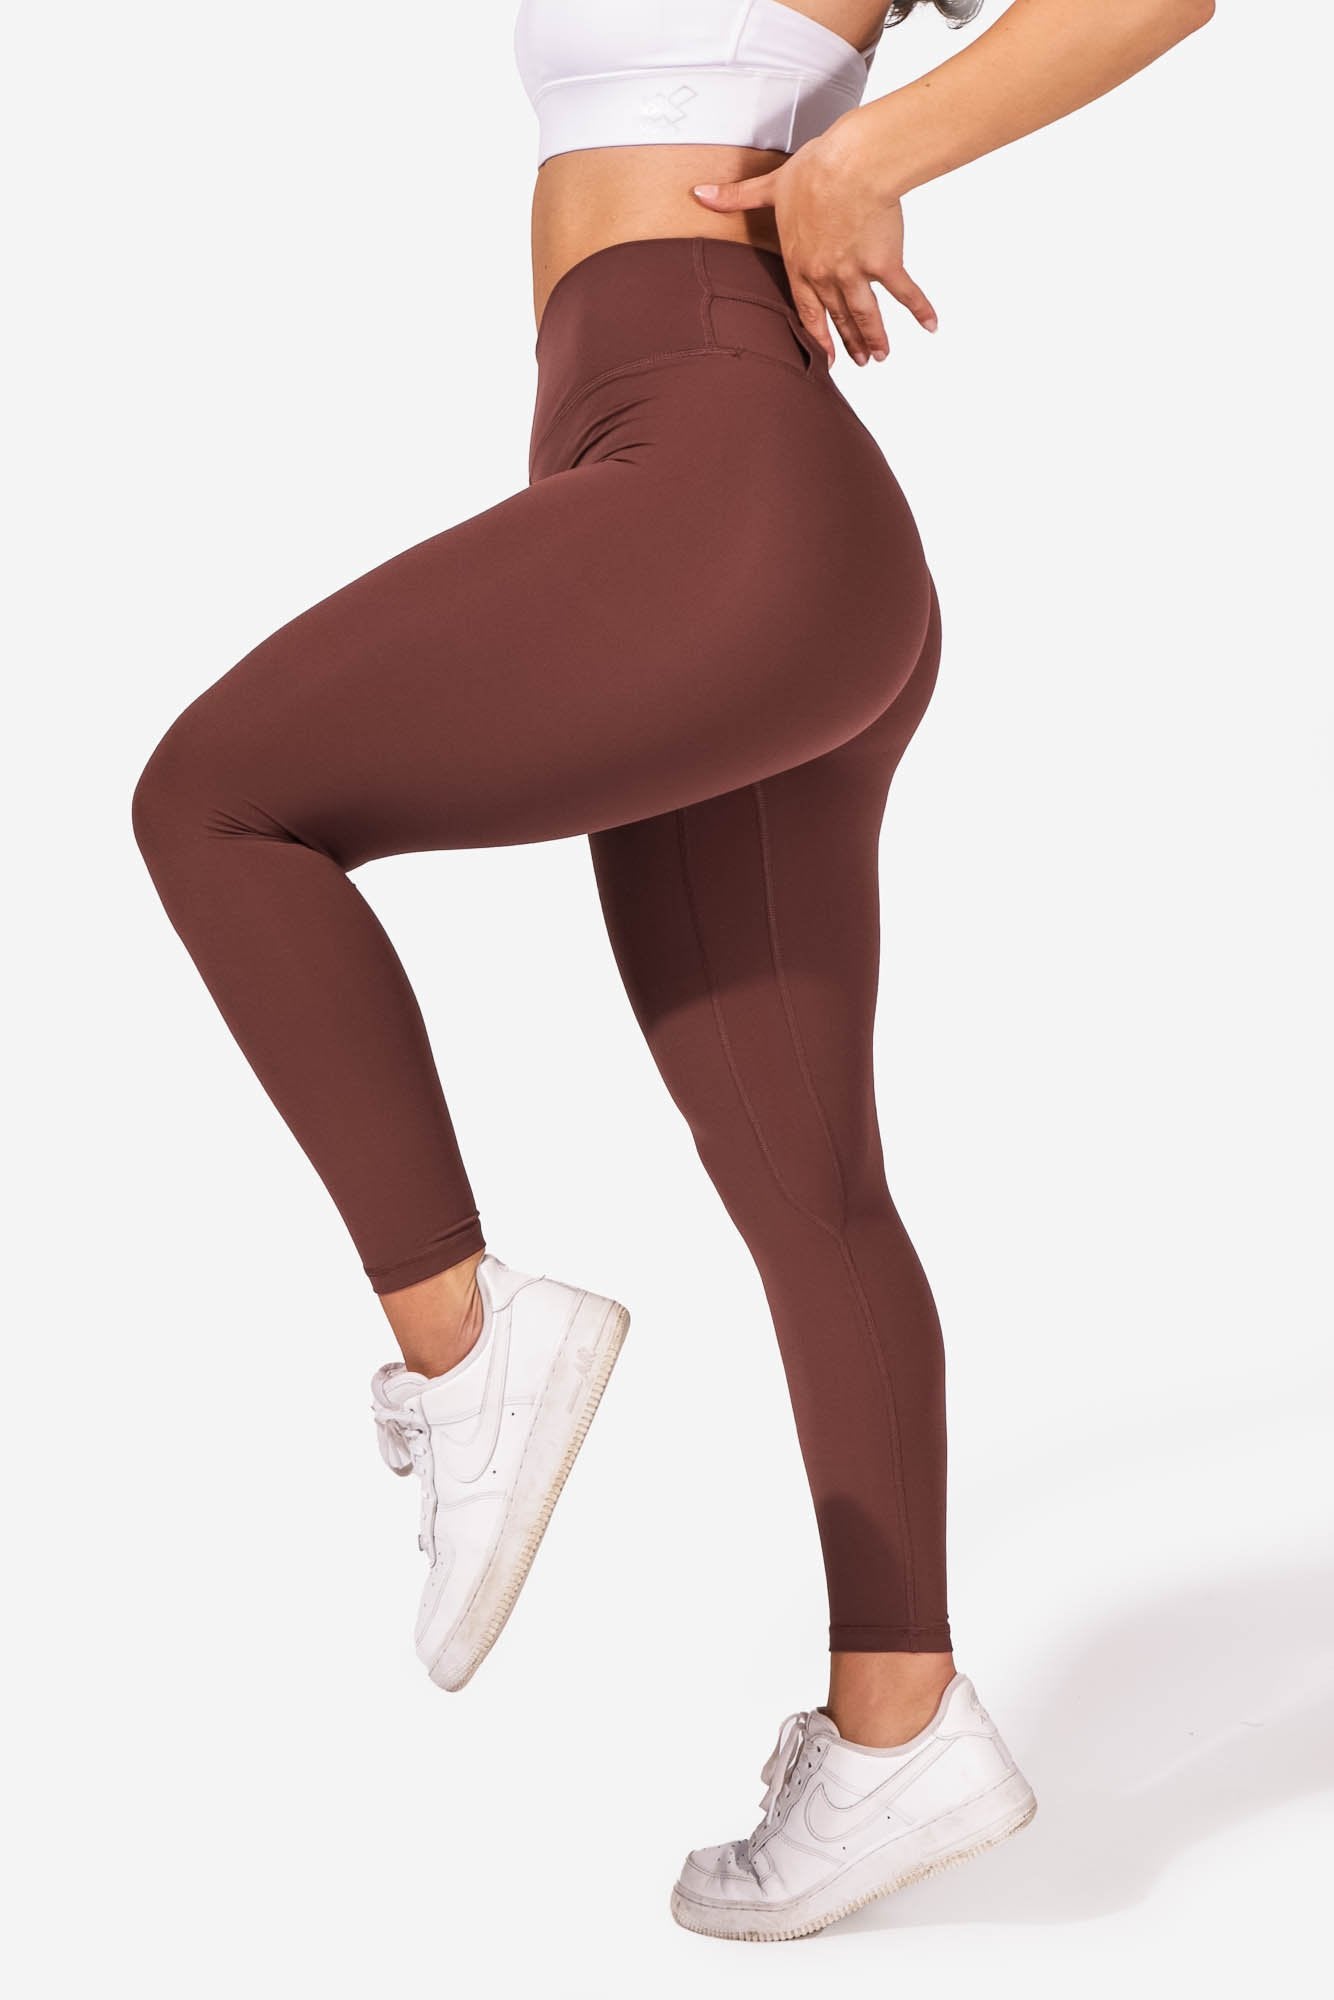 BROWN SNAKE LEGGINGS Yoga Tights Dance Wear Street Wear Cotton Lycra Yoga  Wear Sport Wear Casual Chic High Quality Gym Wear -  Canada